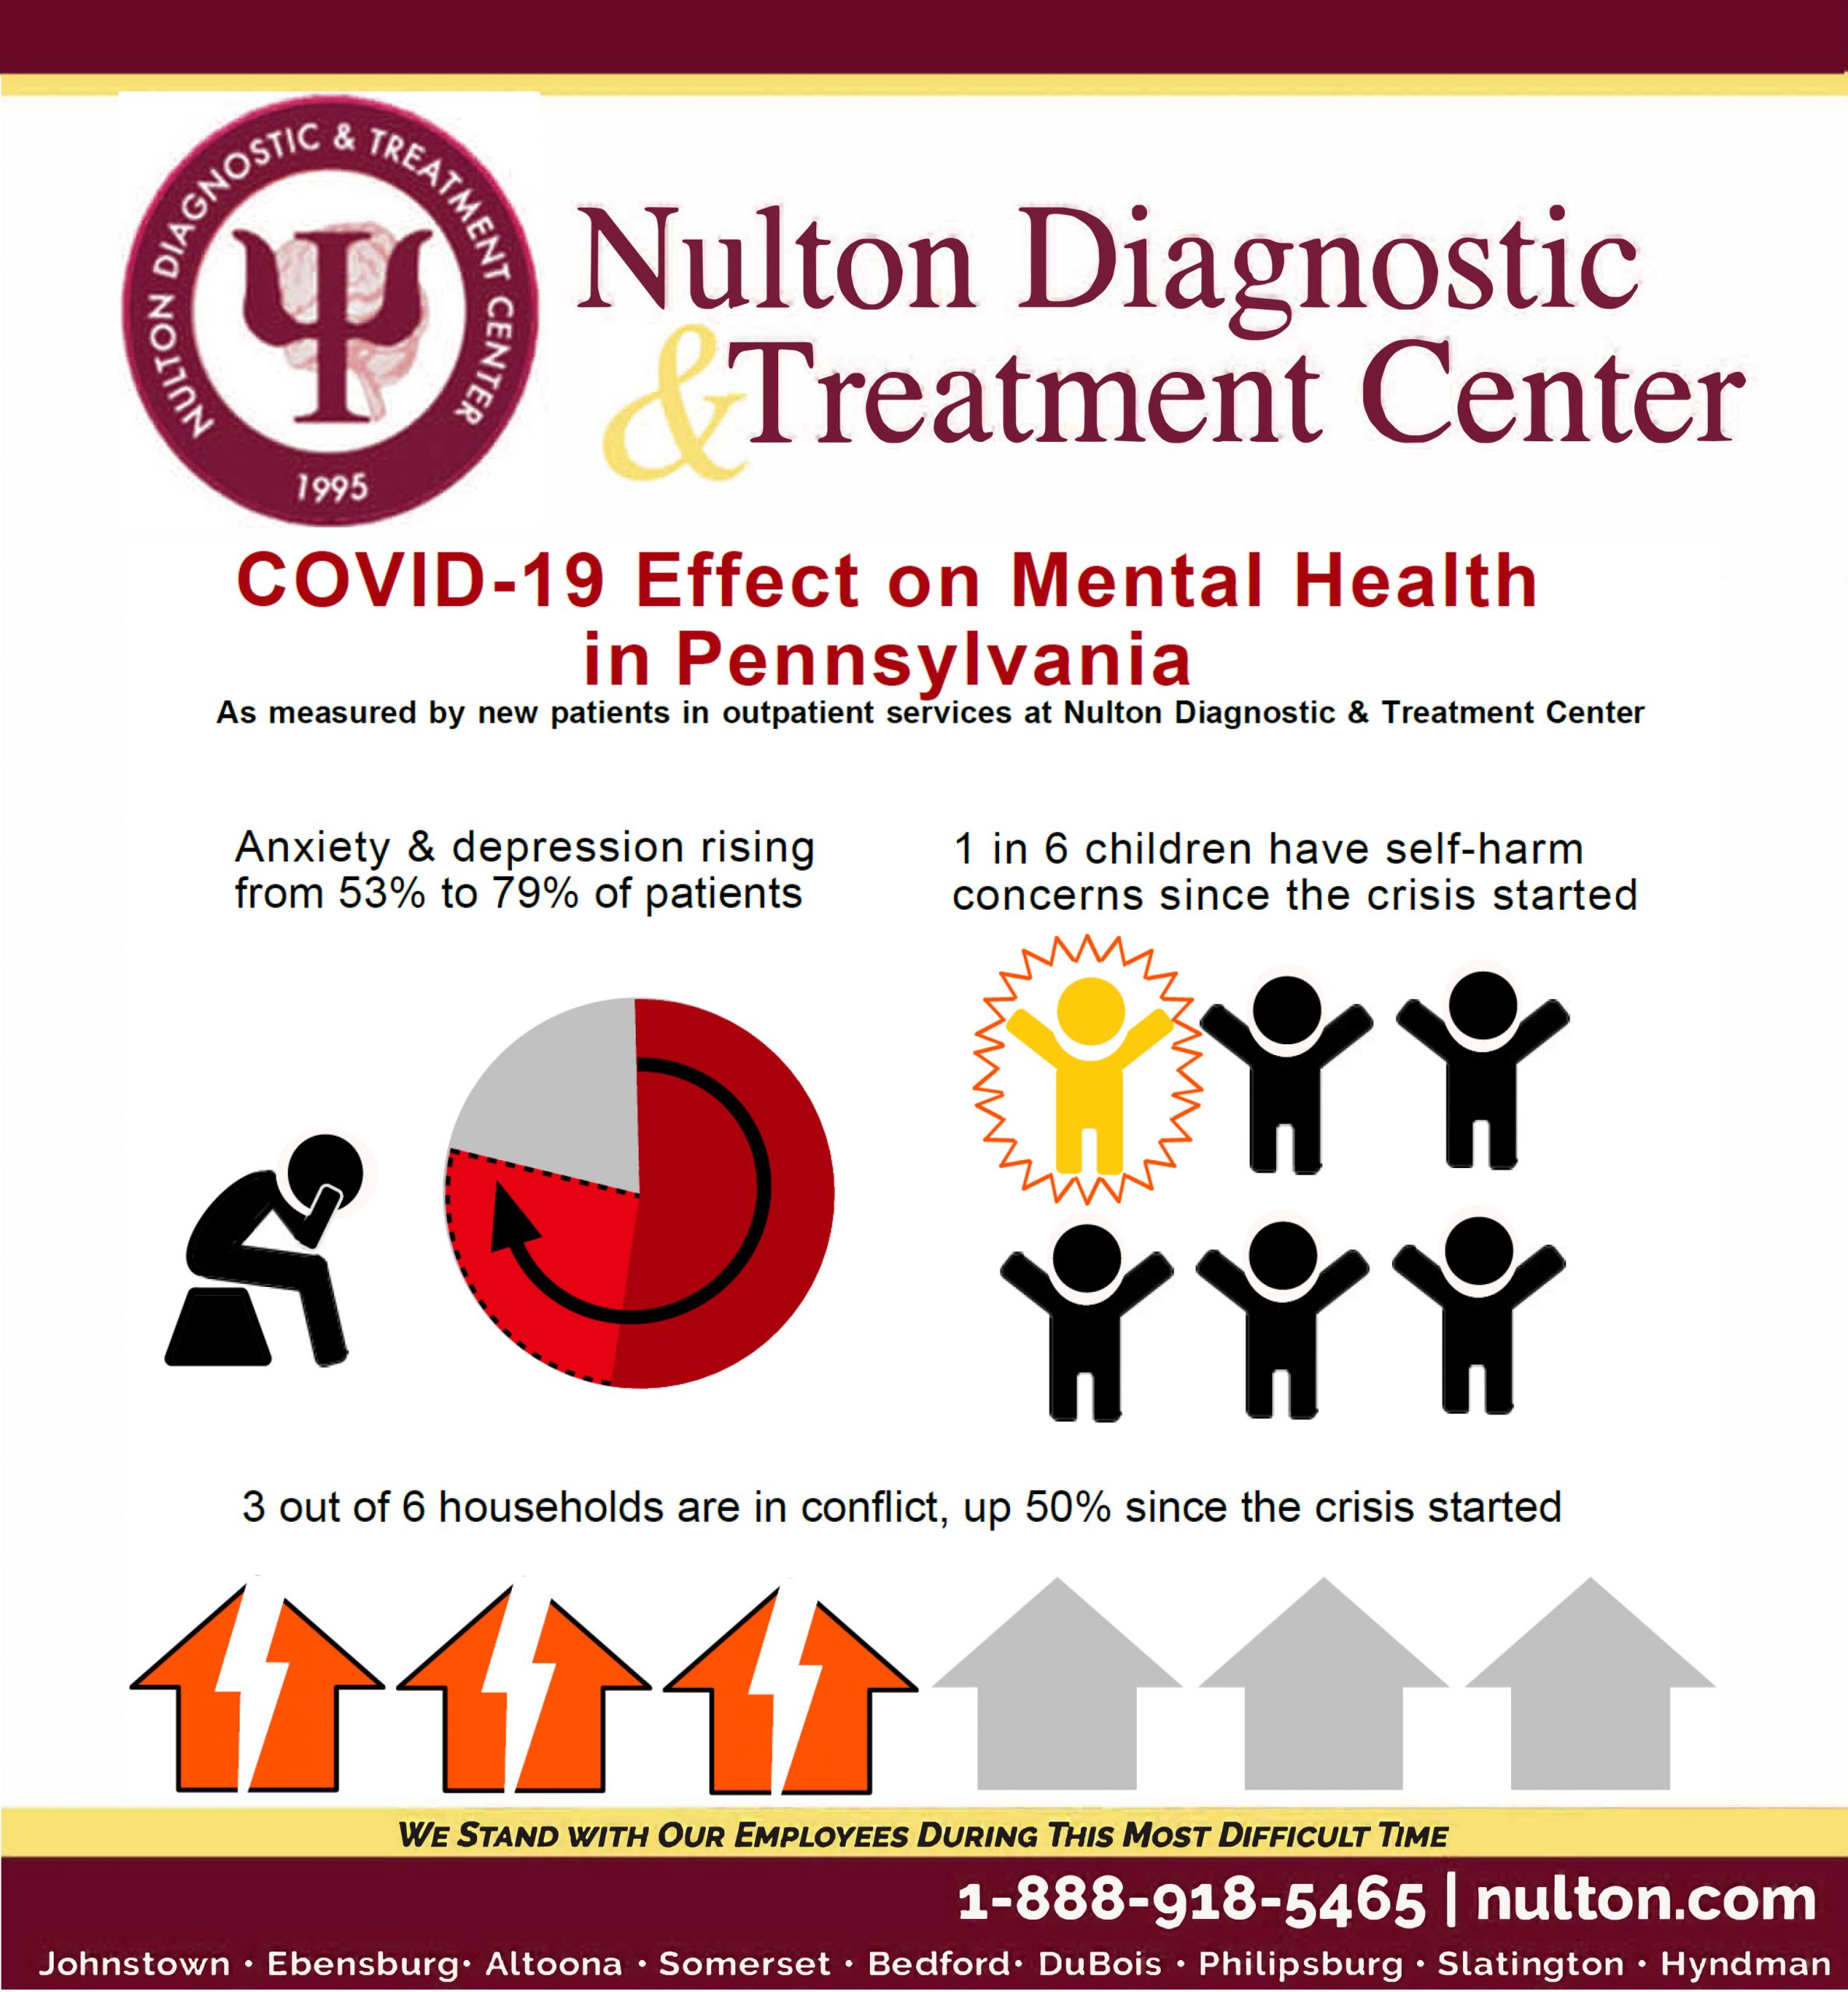 NDTC Covid-19 Effect on Mental Health in Pennsylvania